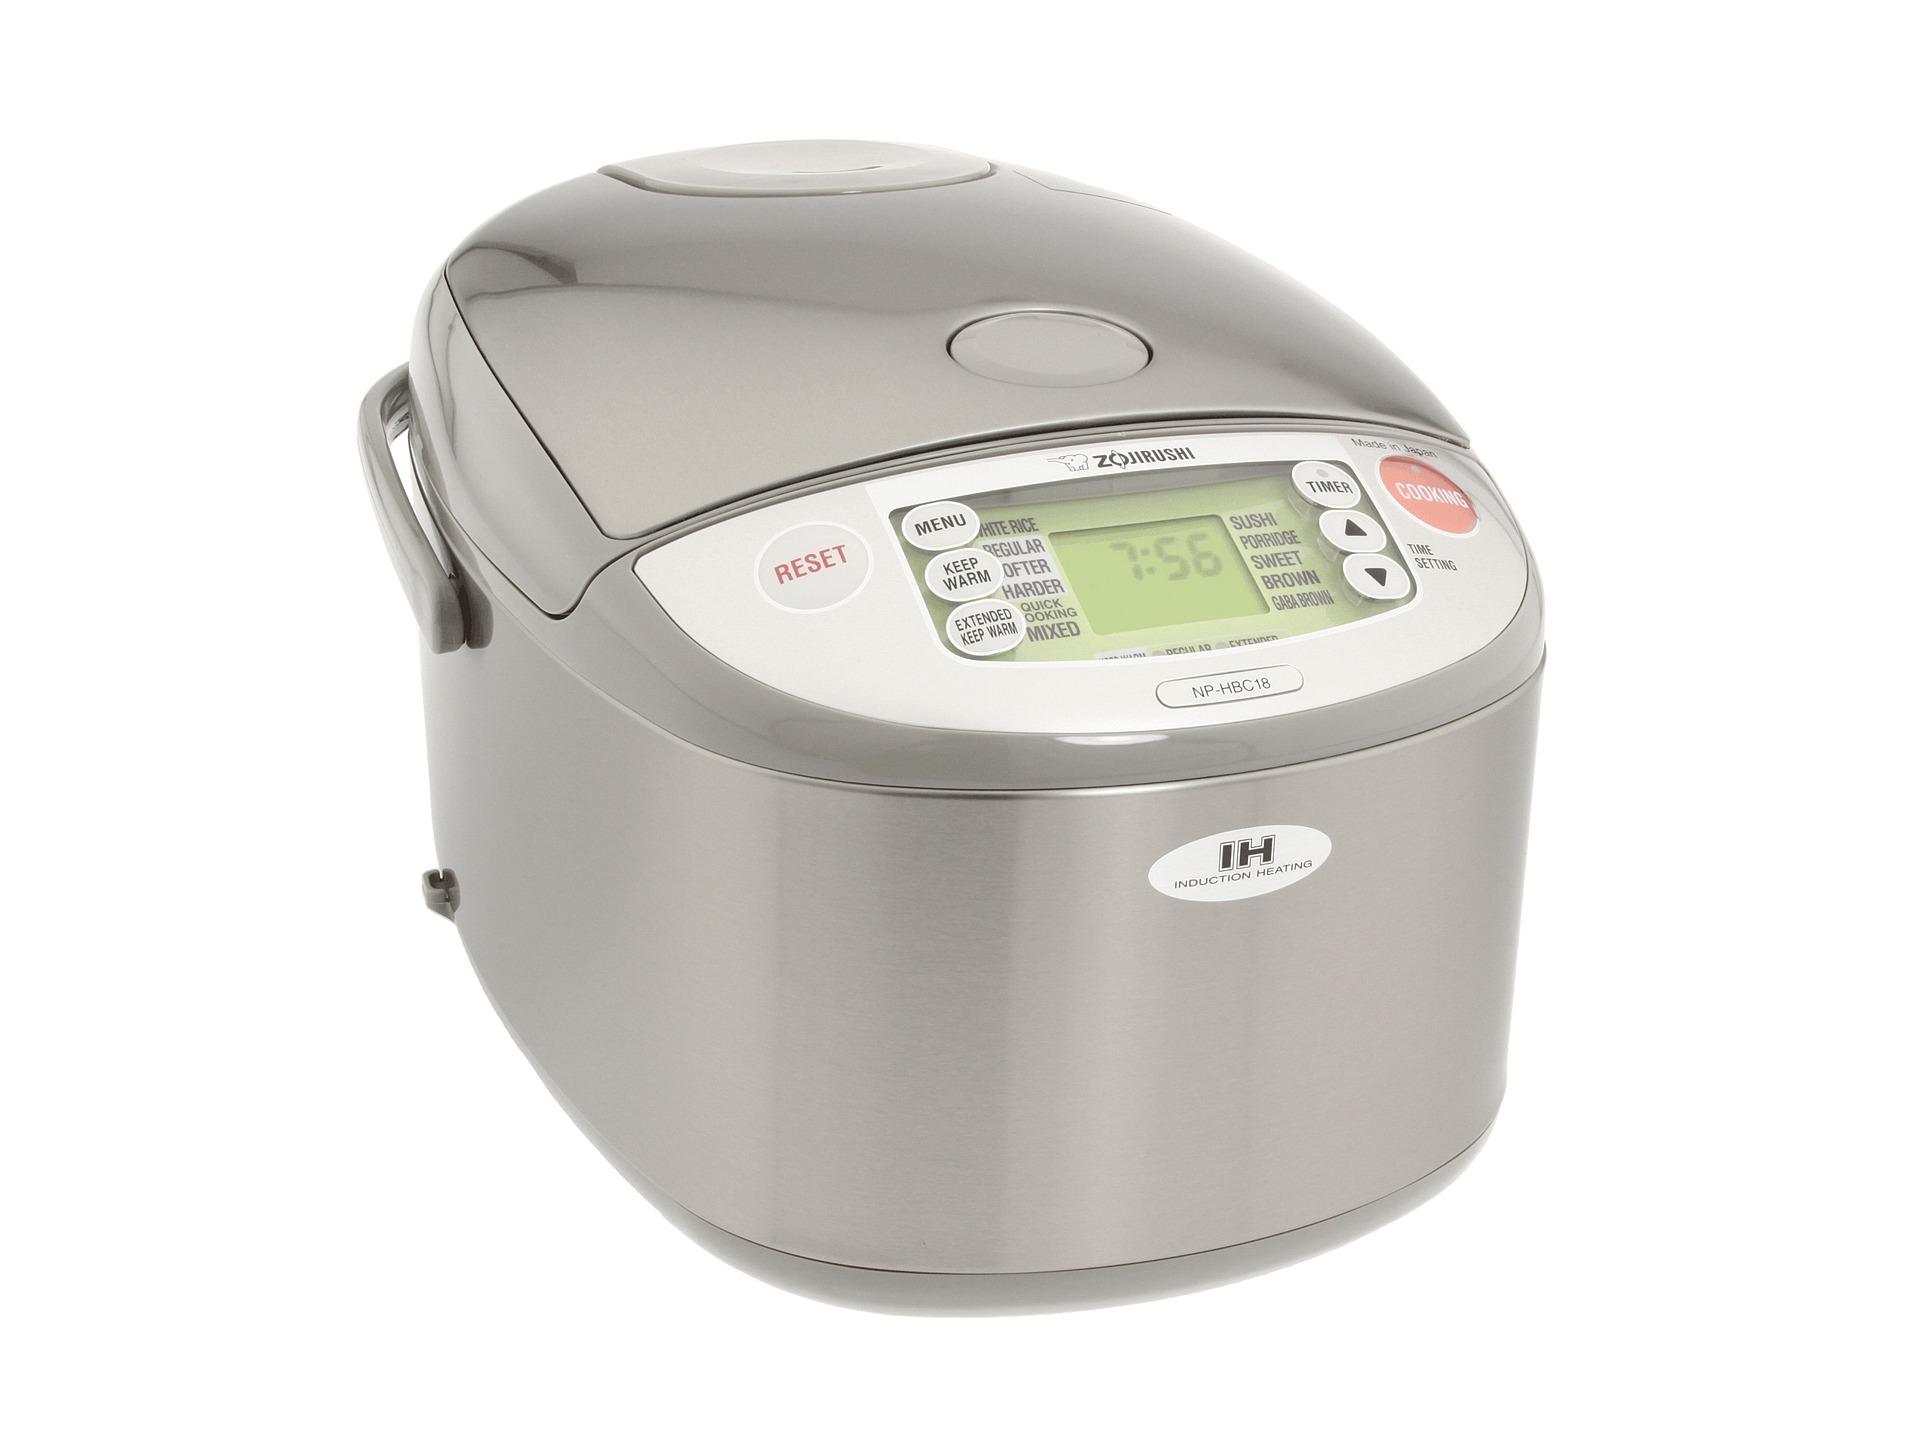 Zojirushi Np Hbc18 Induction Heating 10 Cup Rice Cooker Warmer